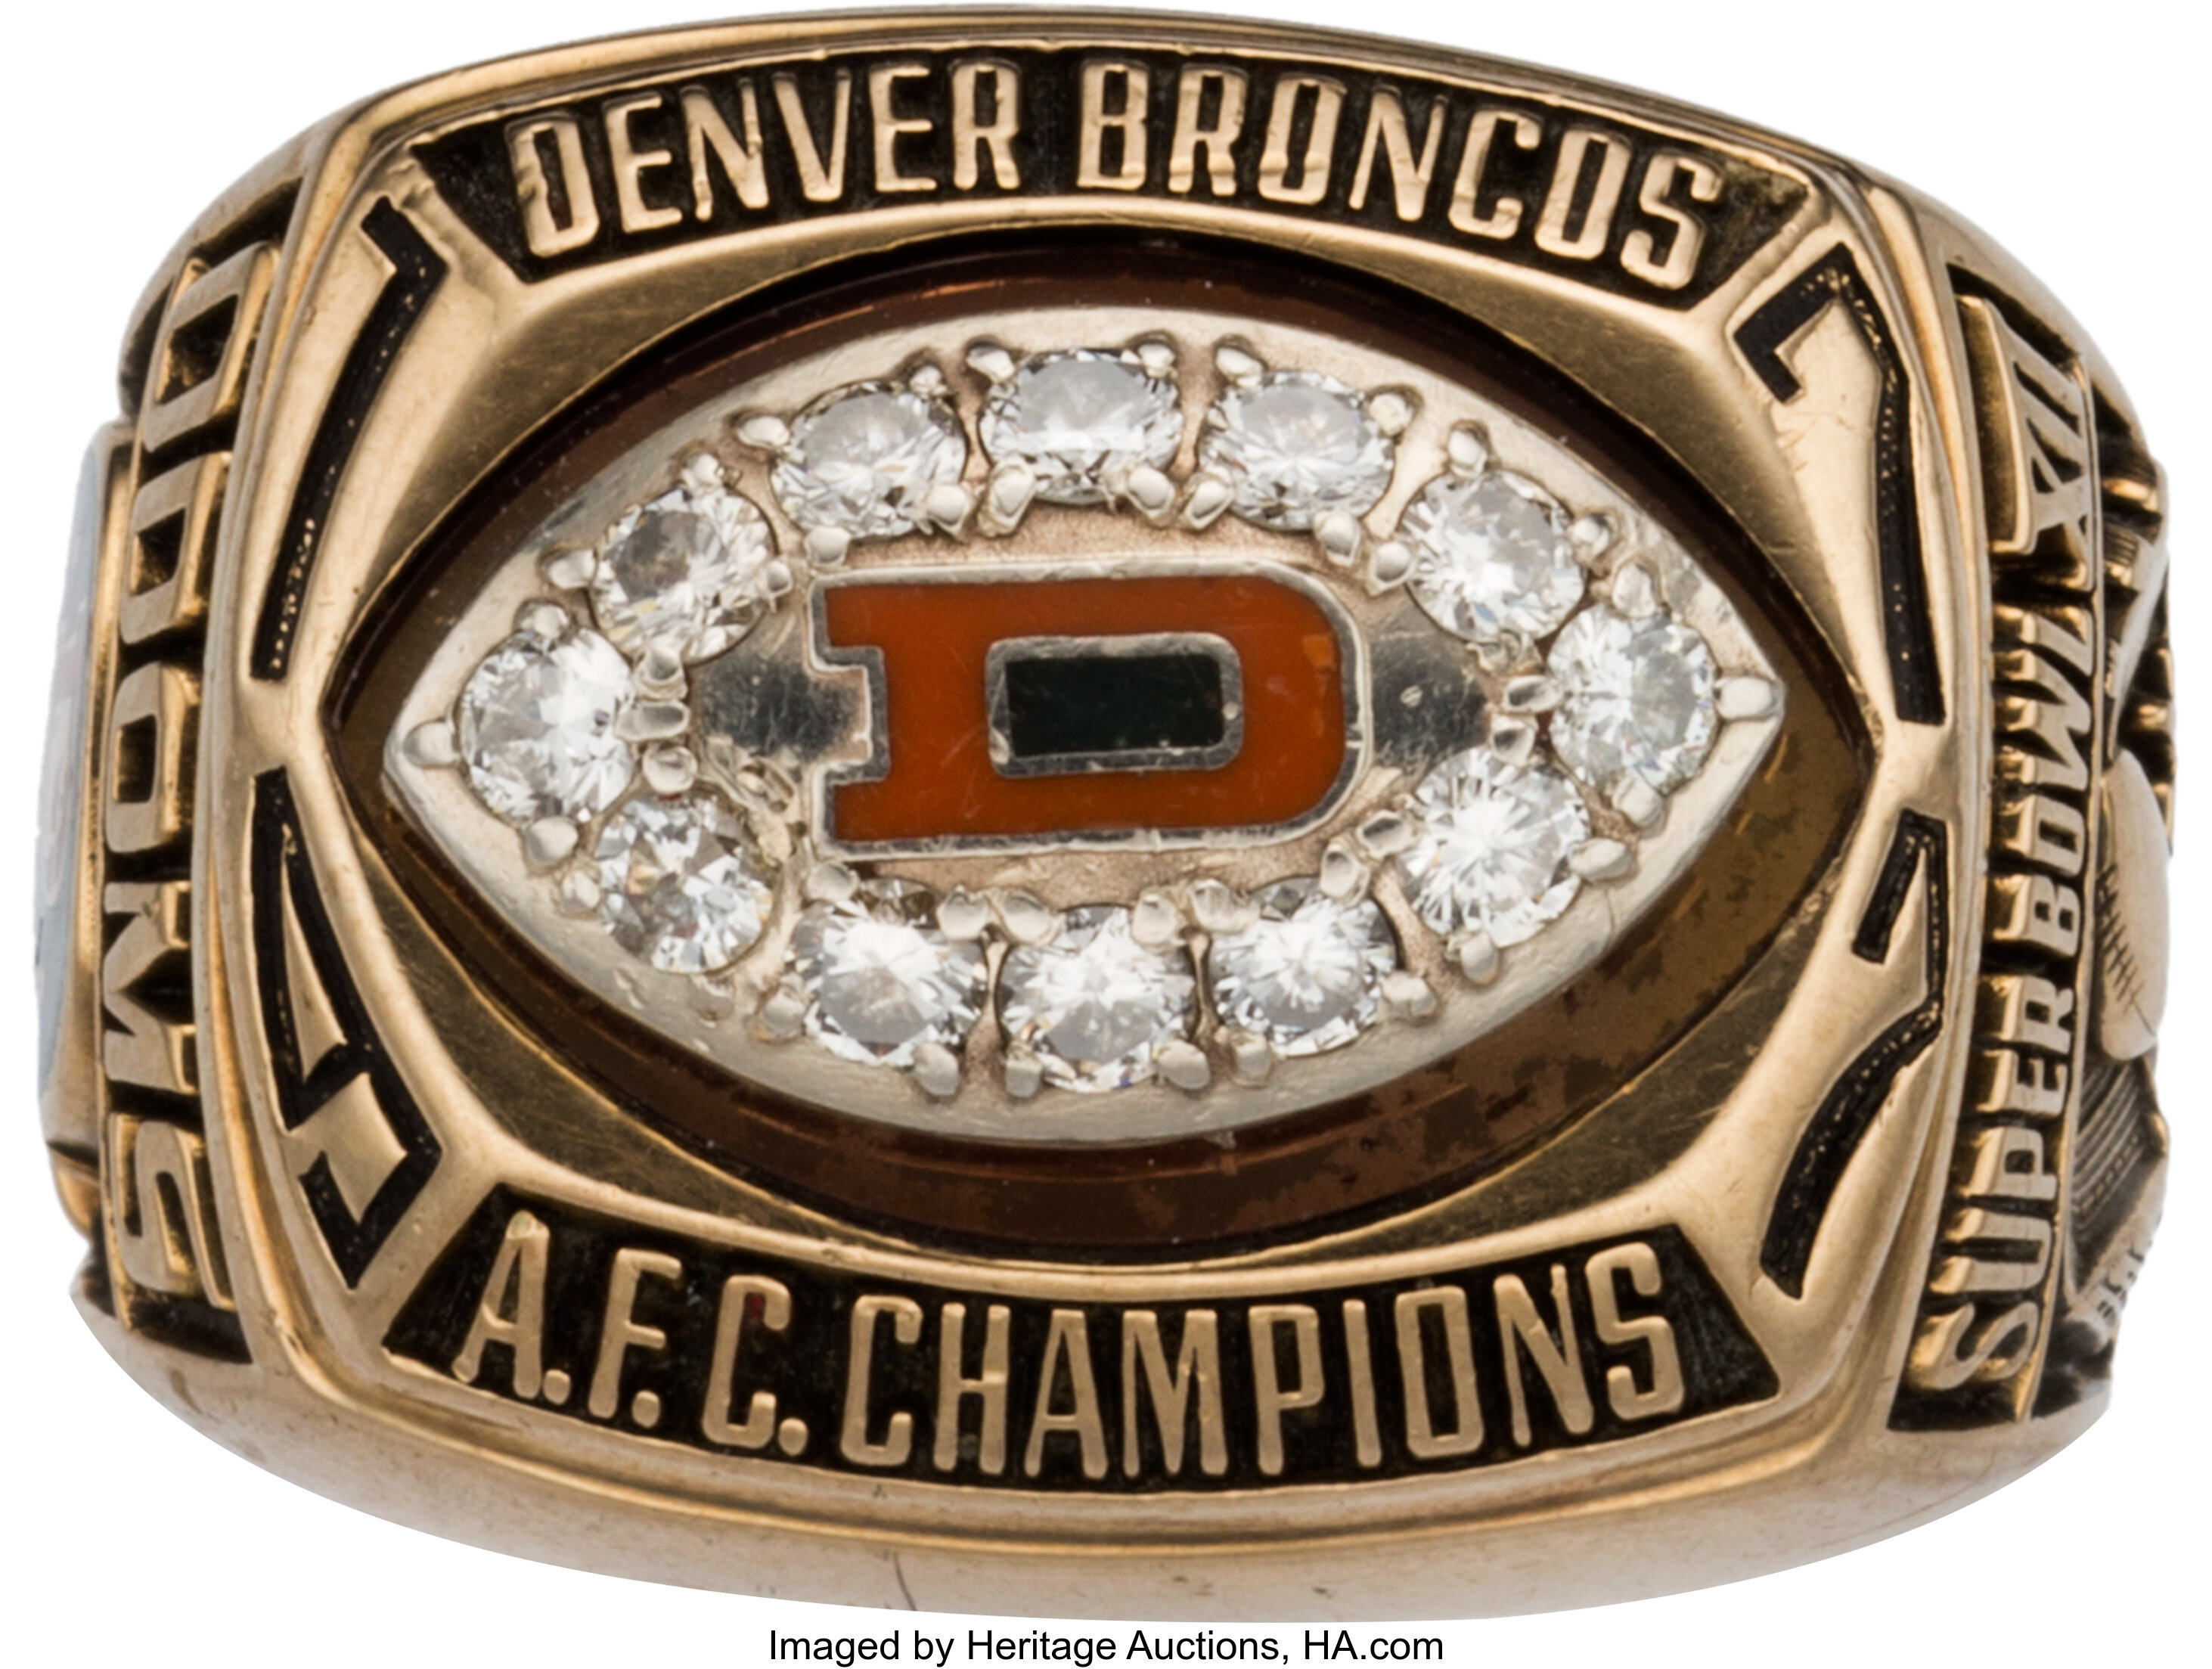 1977 Denver Broncos AFC Championship Ring Presented to Riley, Lot #80535